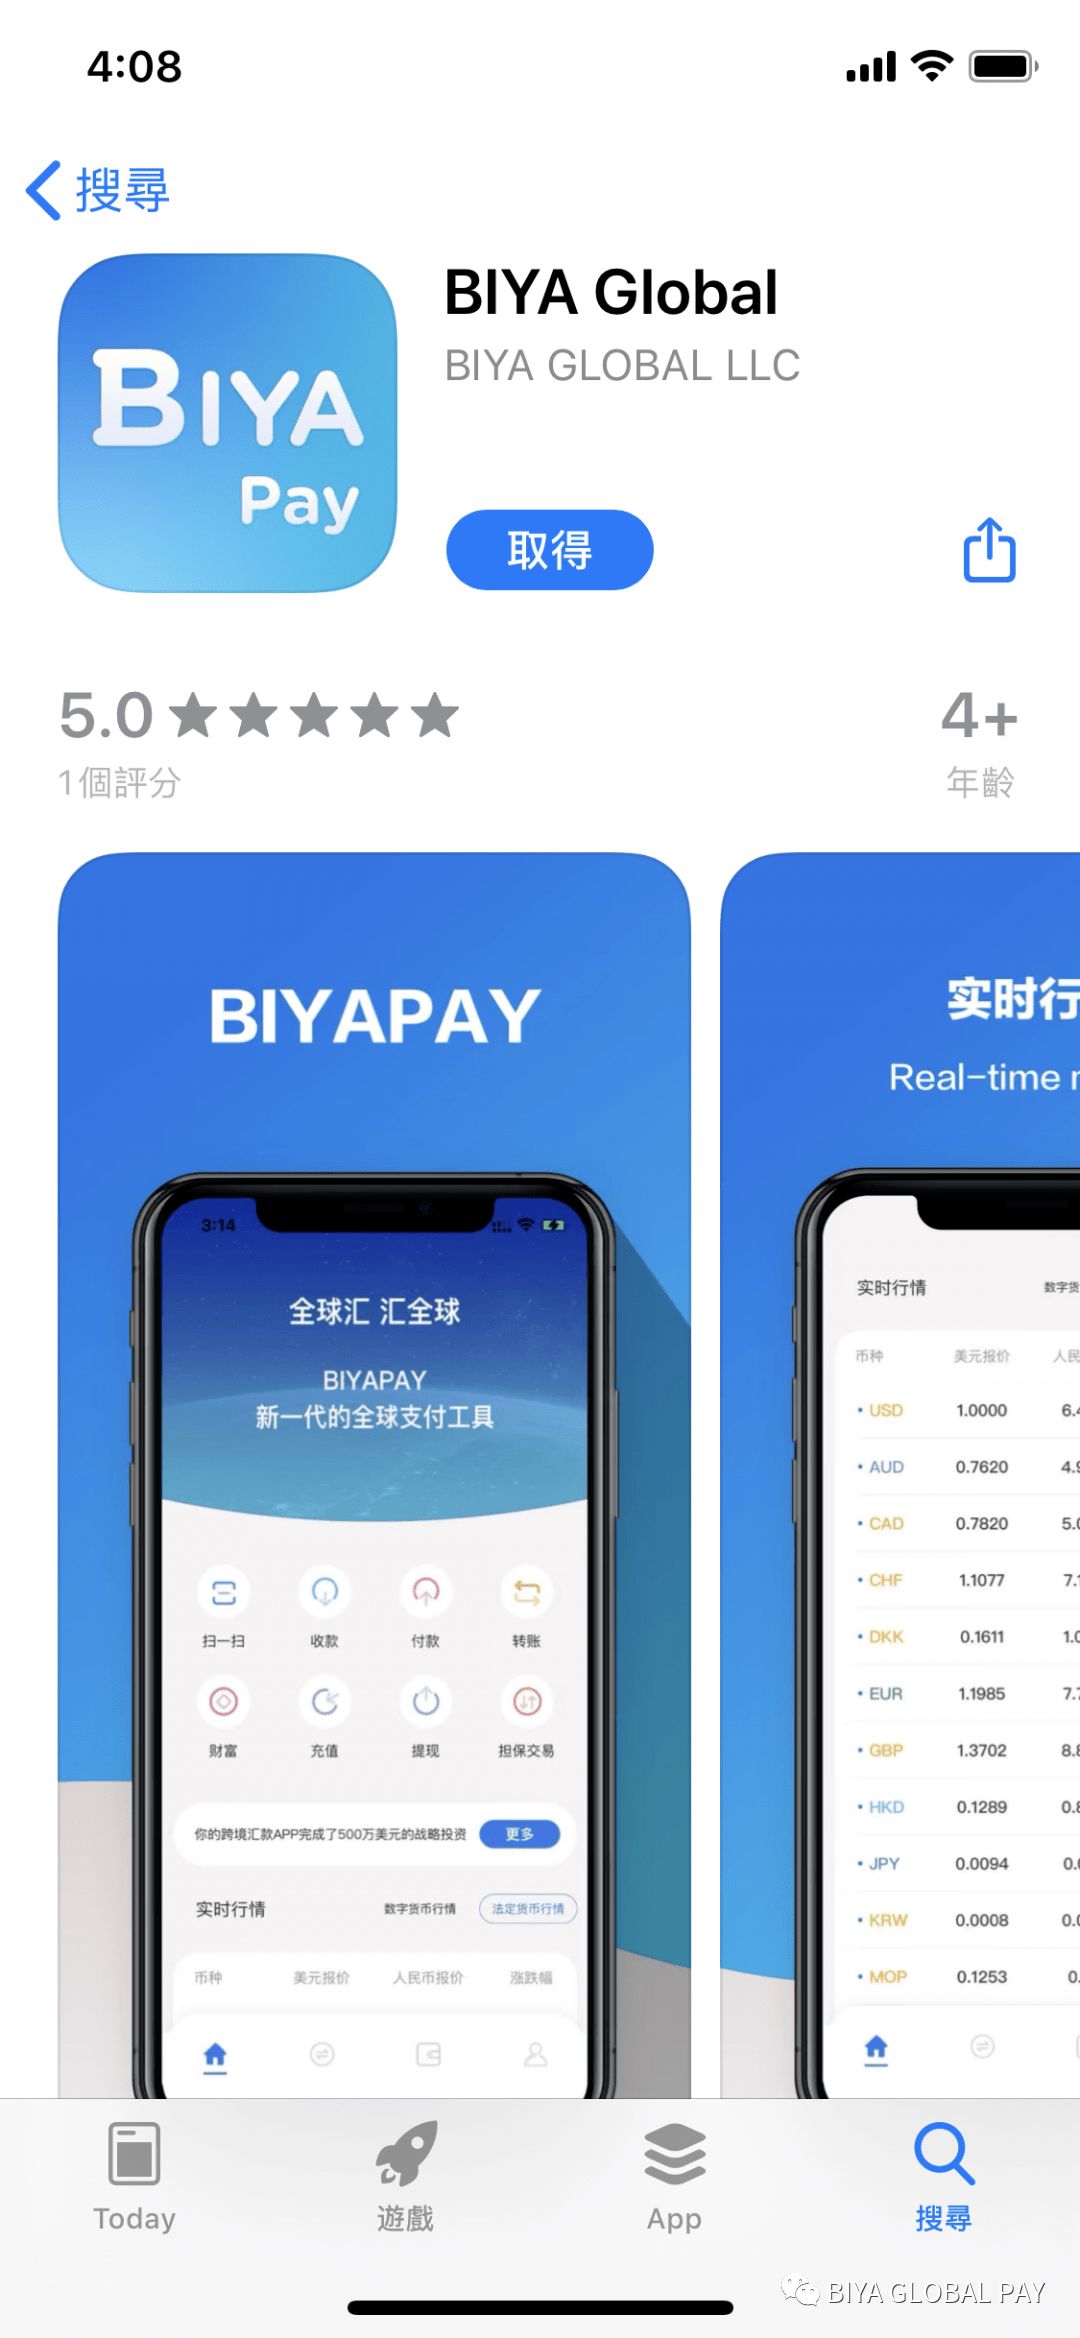 ps:biya global app需要使用香港id方可下载,如果您没有苹果香港id,请